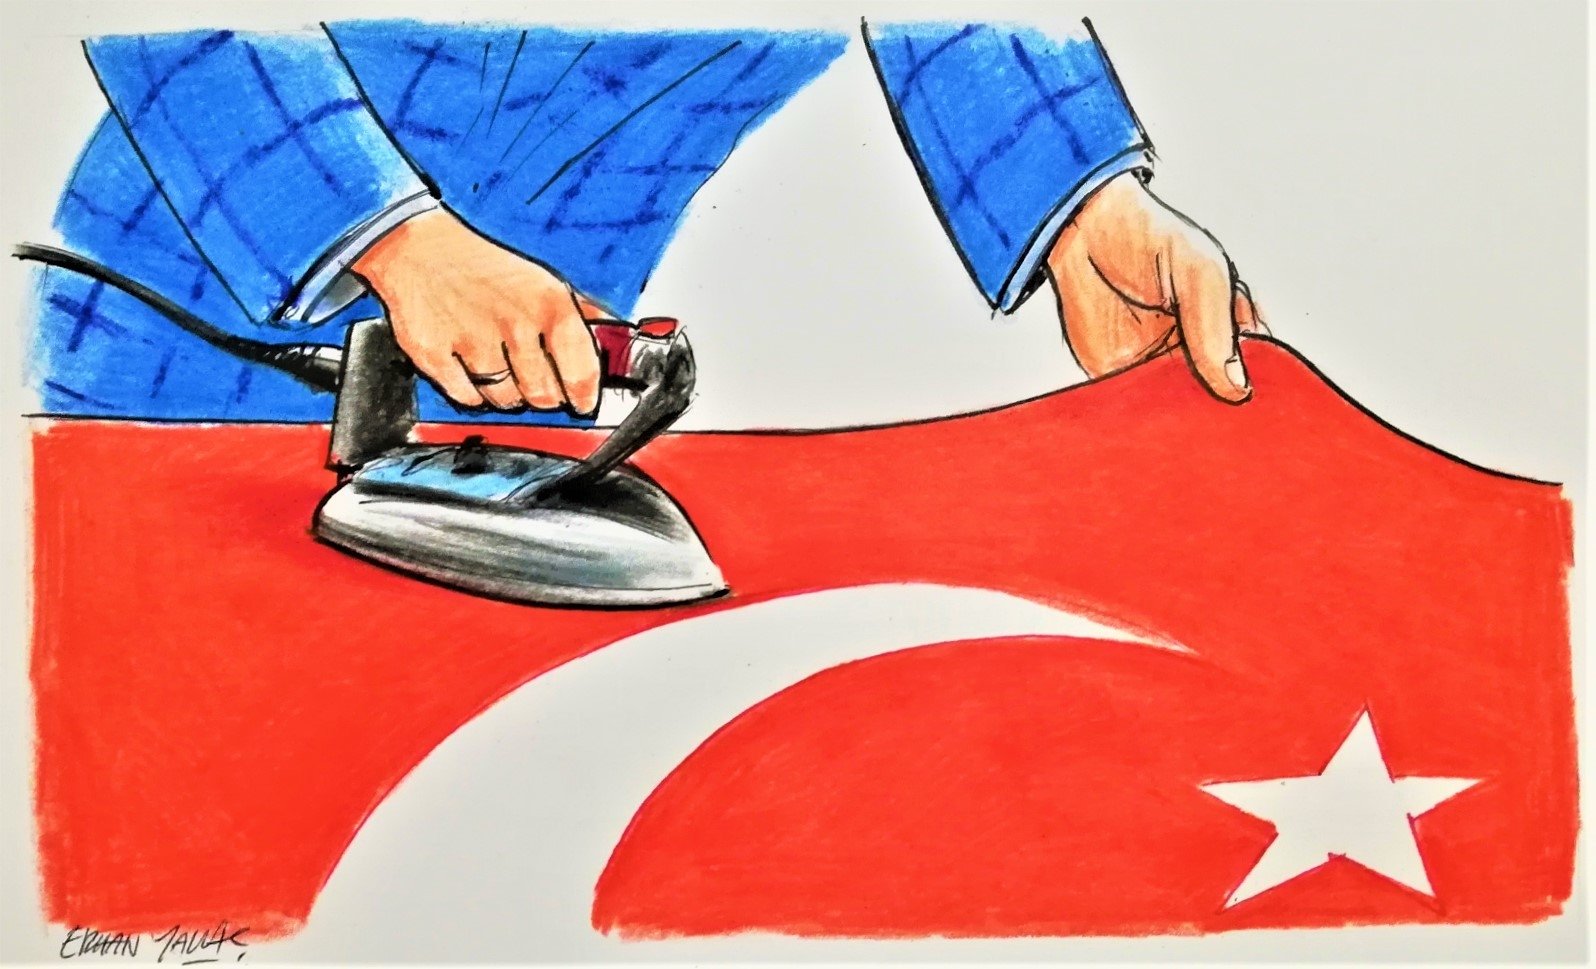 An illustration by Erhan Yalvaç.